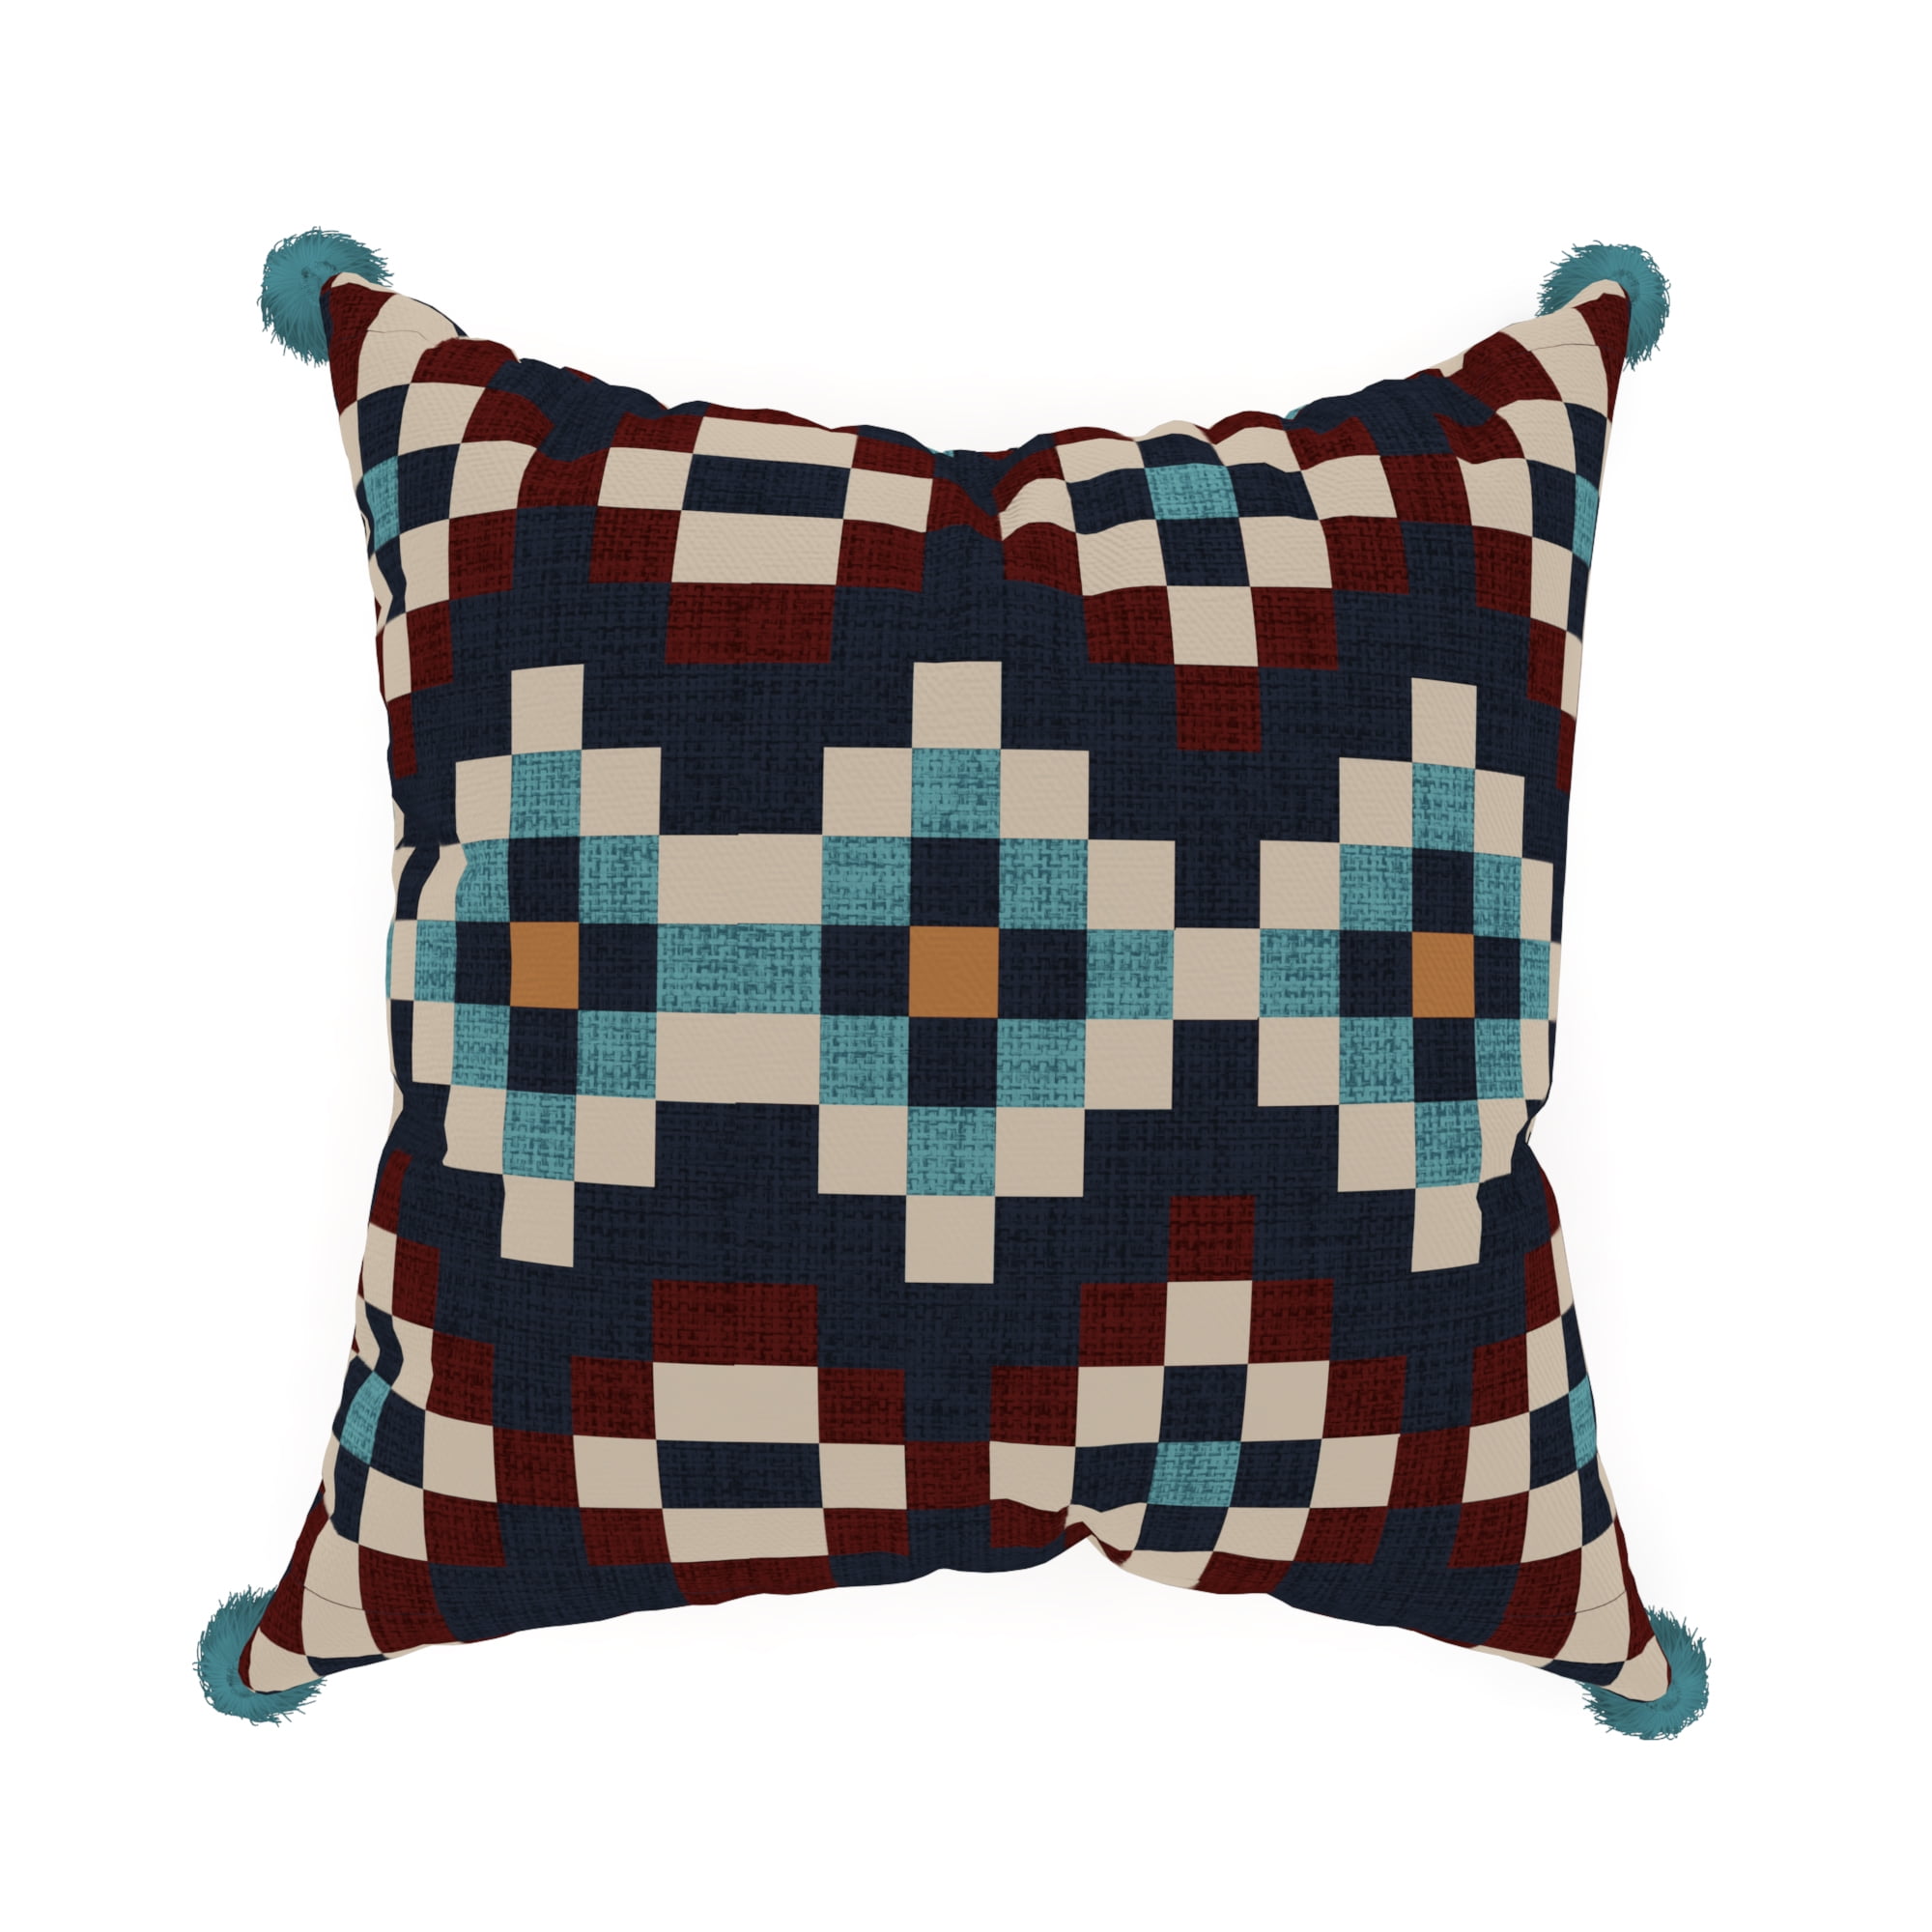 Aztec Geometric Abstract Linen Cotton Cushion Cover Throw Pillowcase Home Decor 